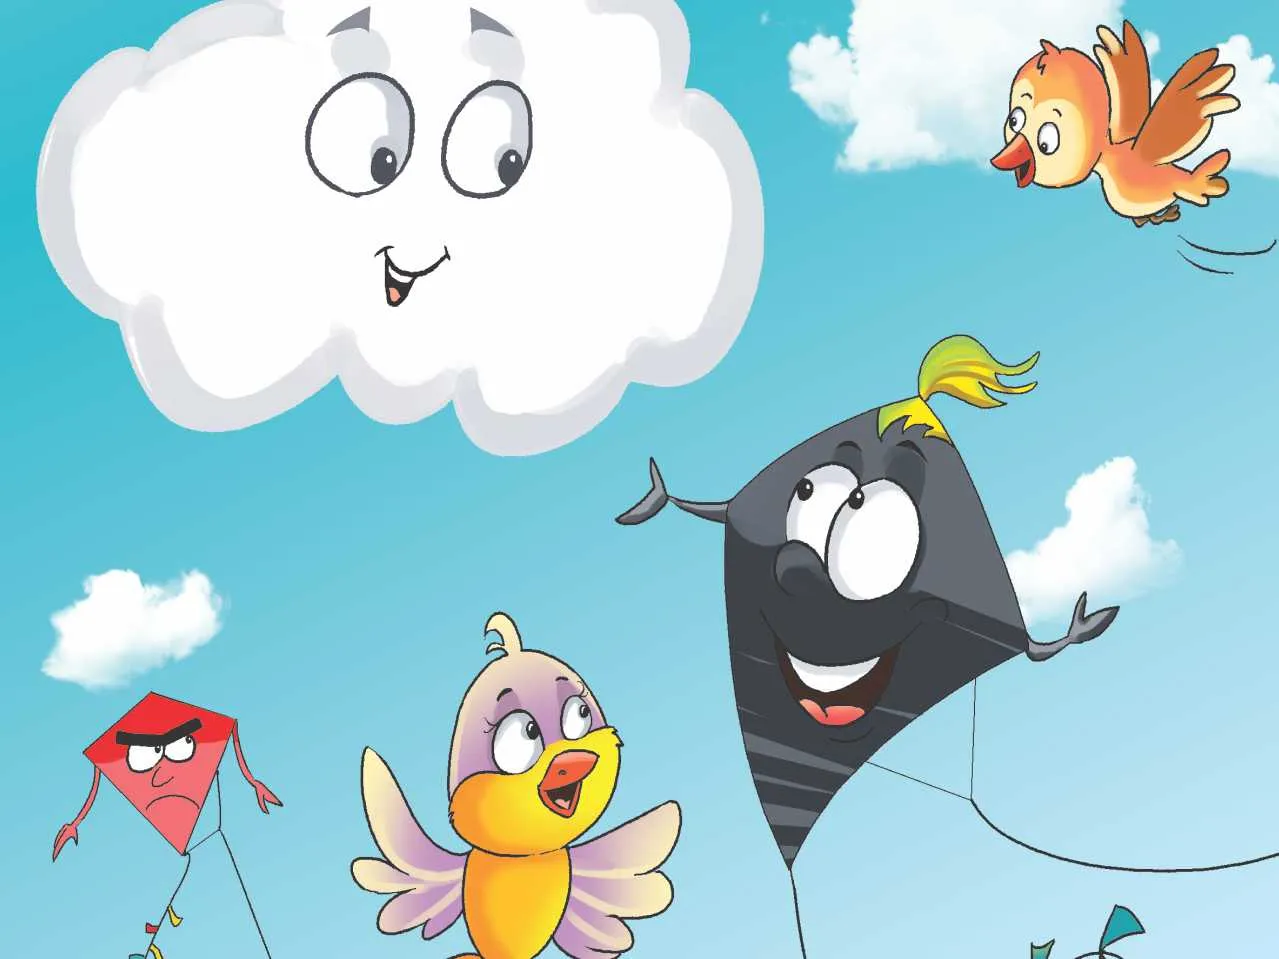 Colorfull kites flying in sky cartoon image